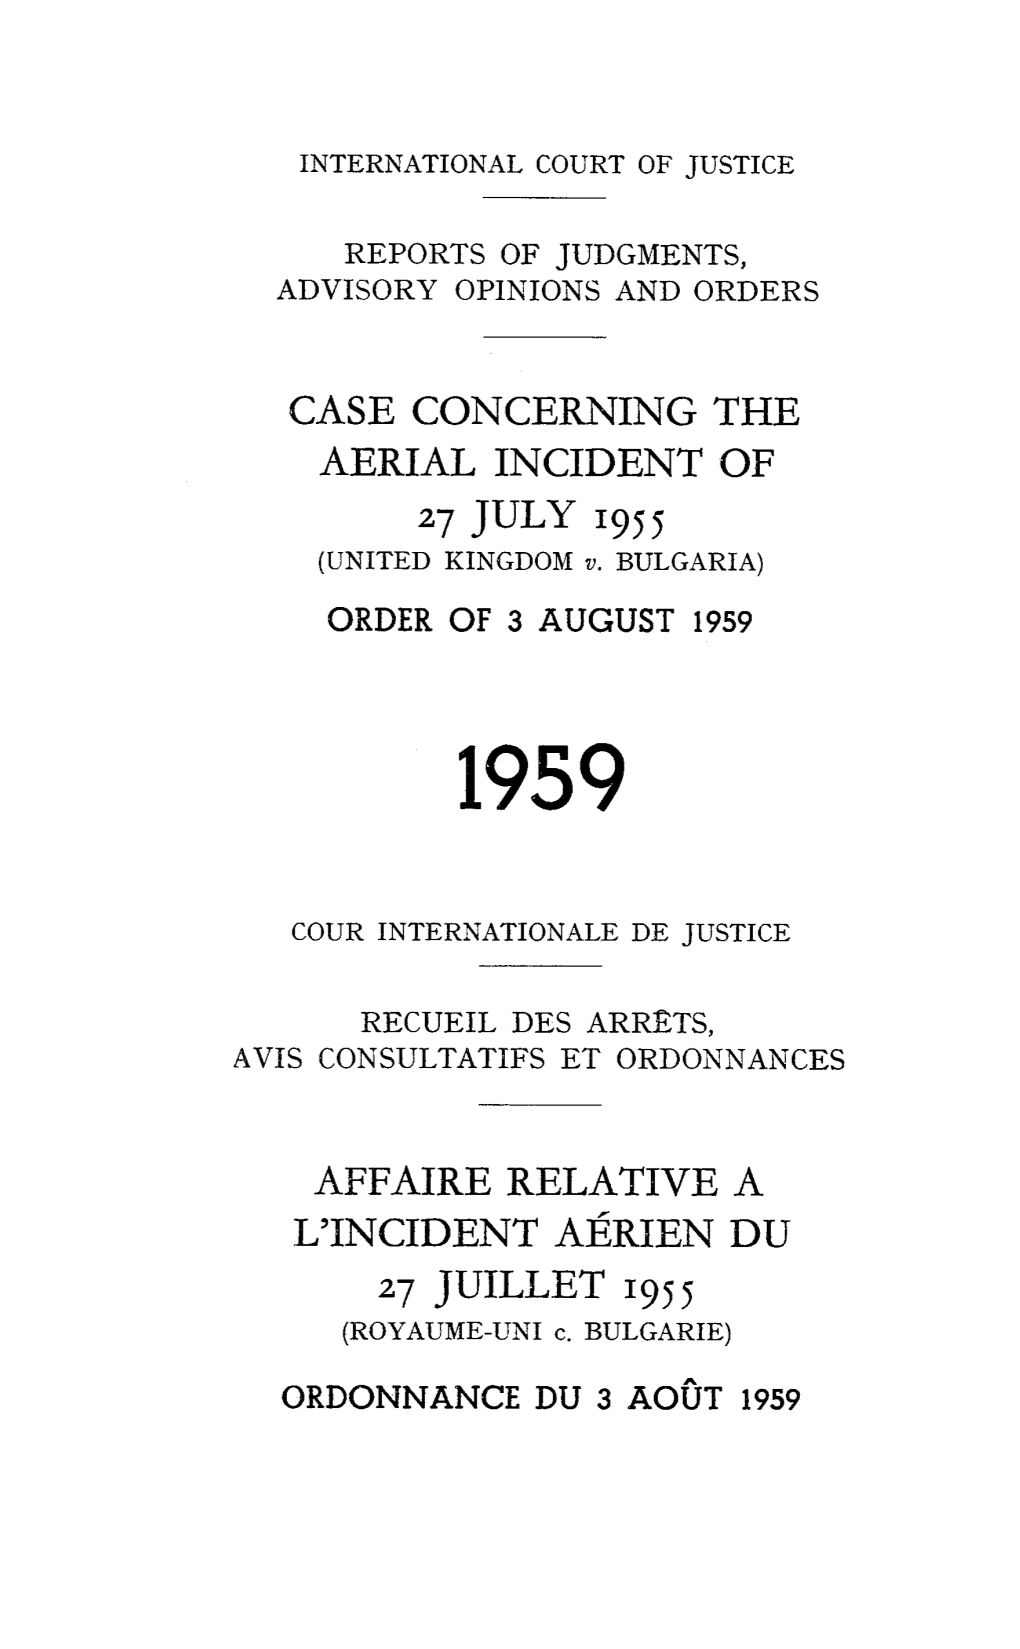 Case Concerning the Aerial Incident of 27 July 1955 Affaire Relative a L'incident Aérien Du 27 Juillet 195 5